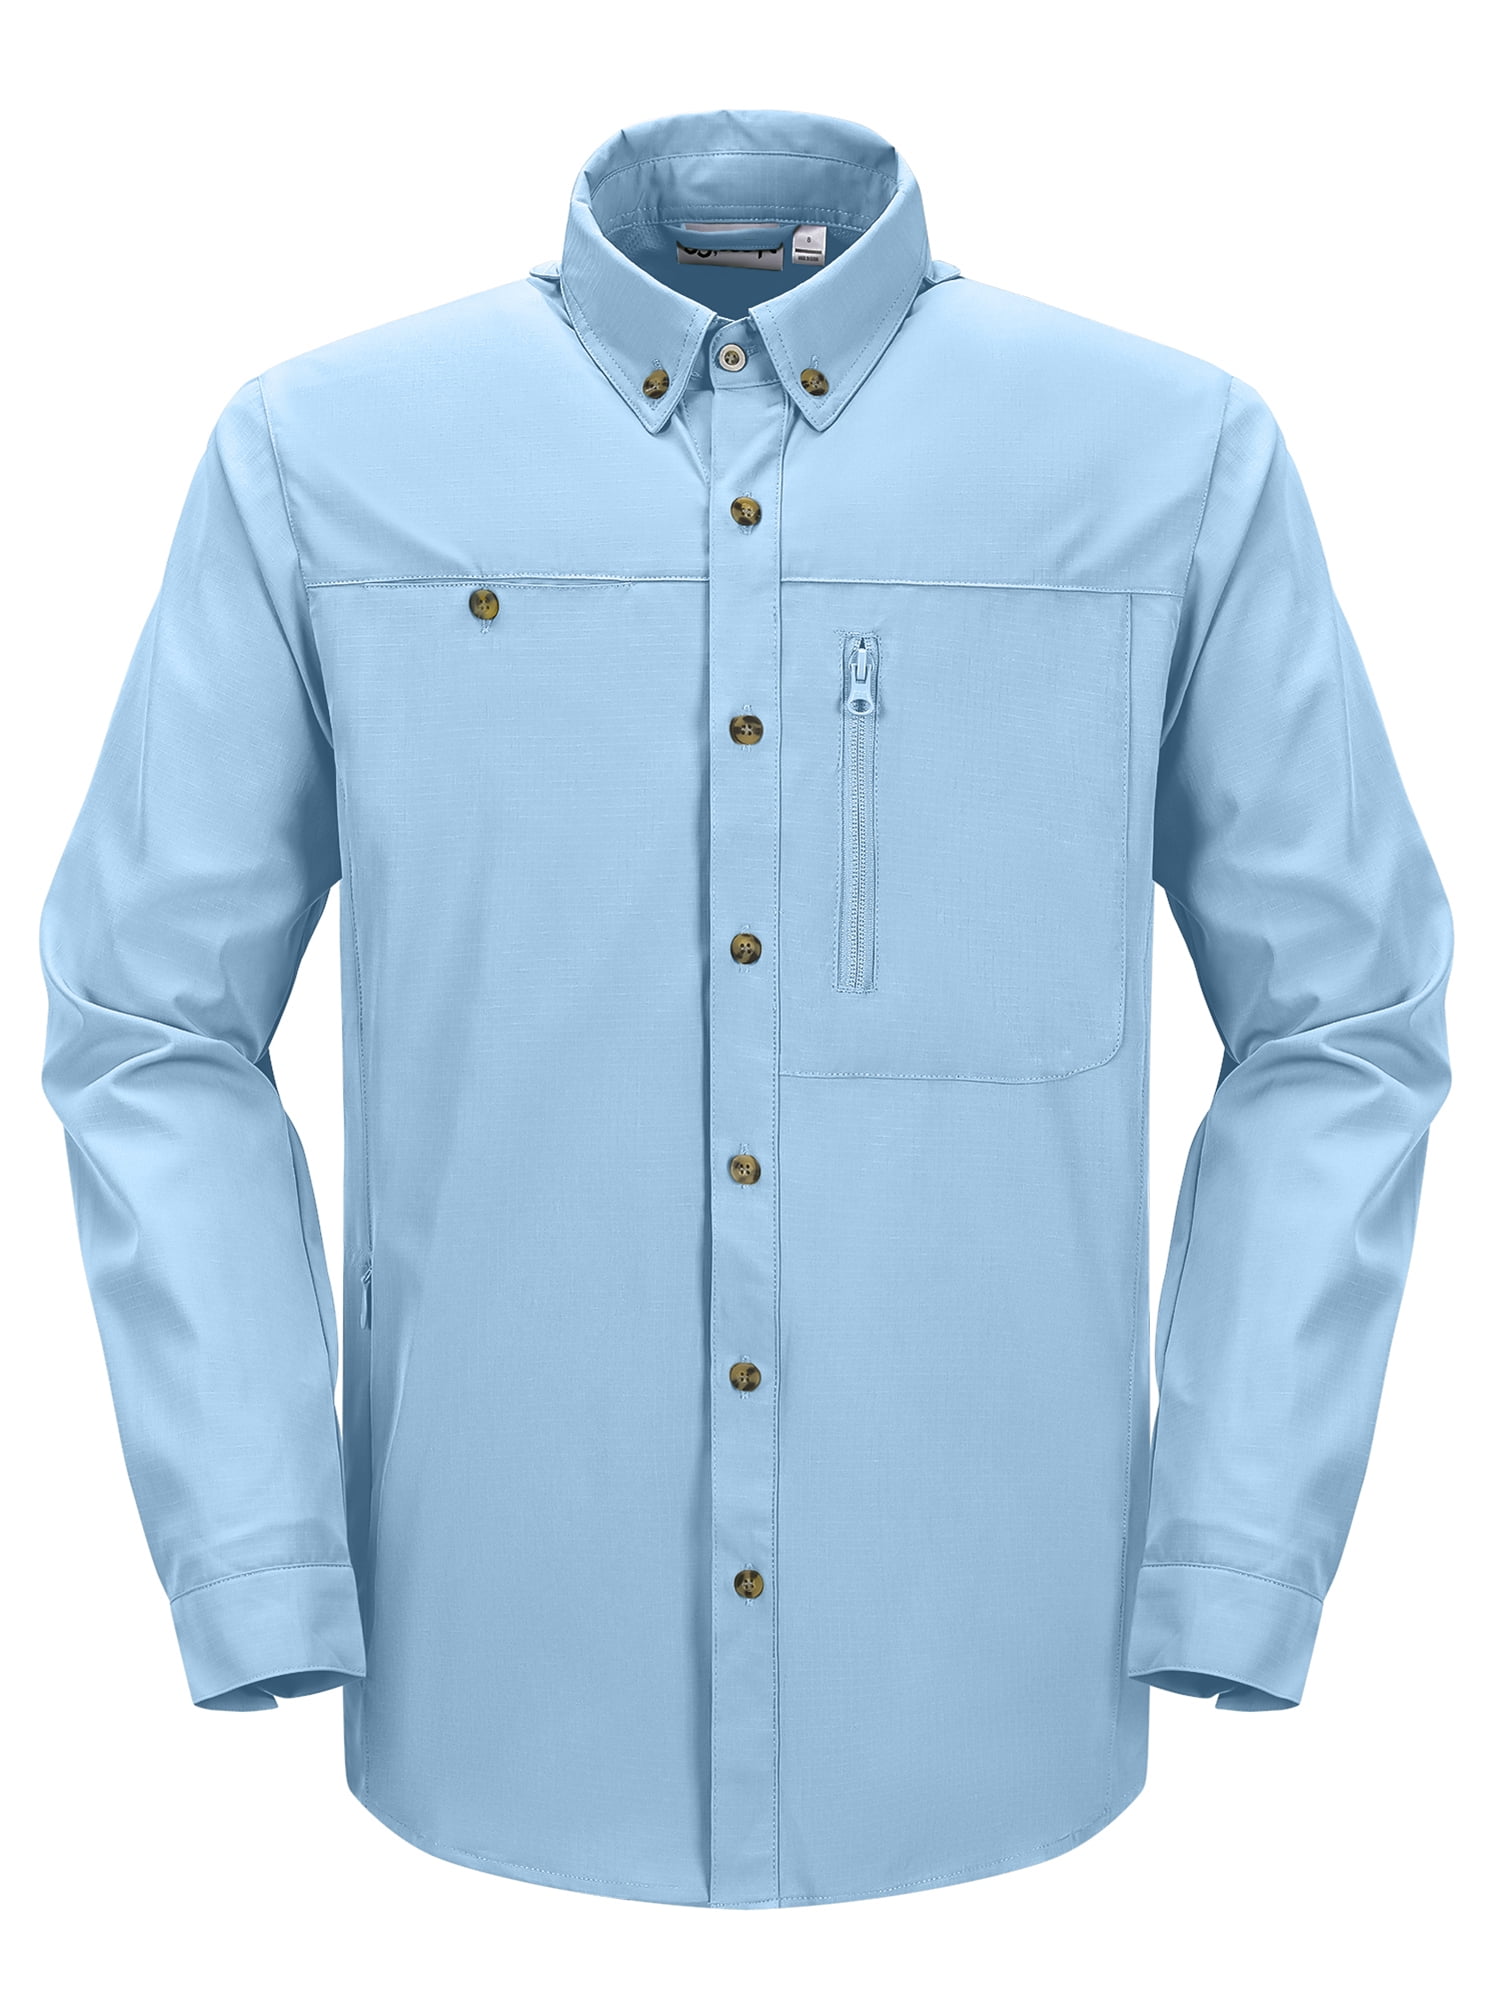 SPELISPOS Latest Fishing Shirt Long Sleeve UV Protection Fishing Clothing  Outdoor Men Summer UPF 50+ Apparel Performance Tops - AliExpress